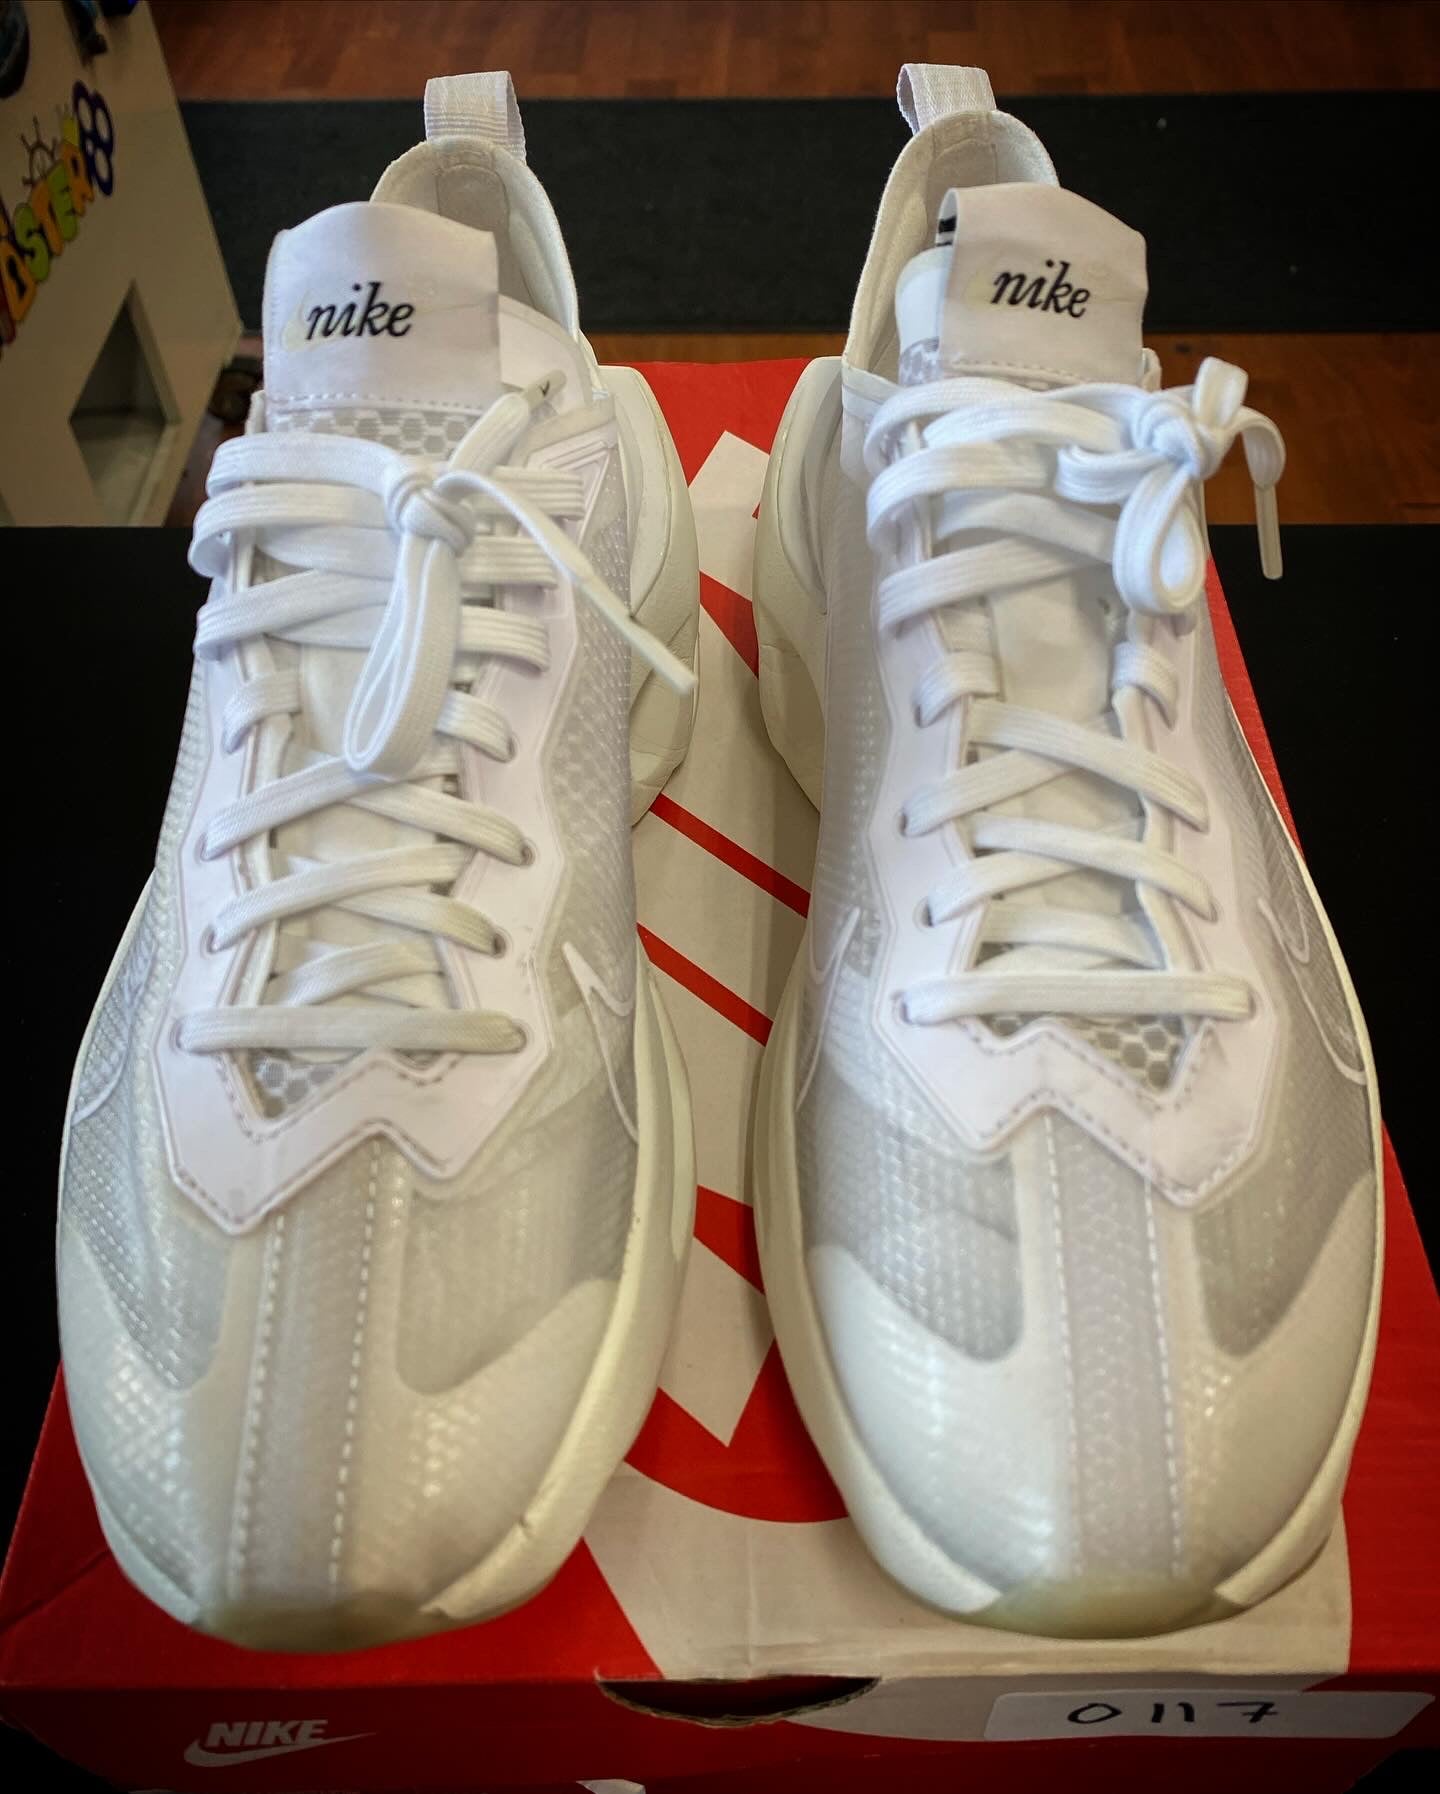 Nike ZoomX Vista Grind "White" (W)